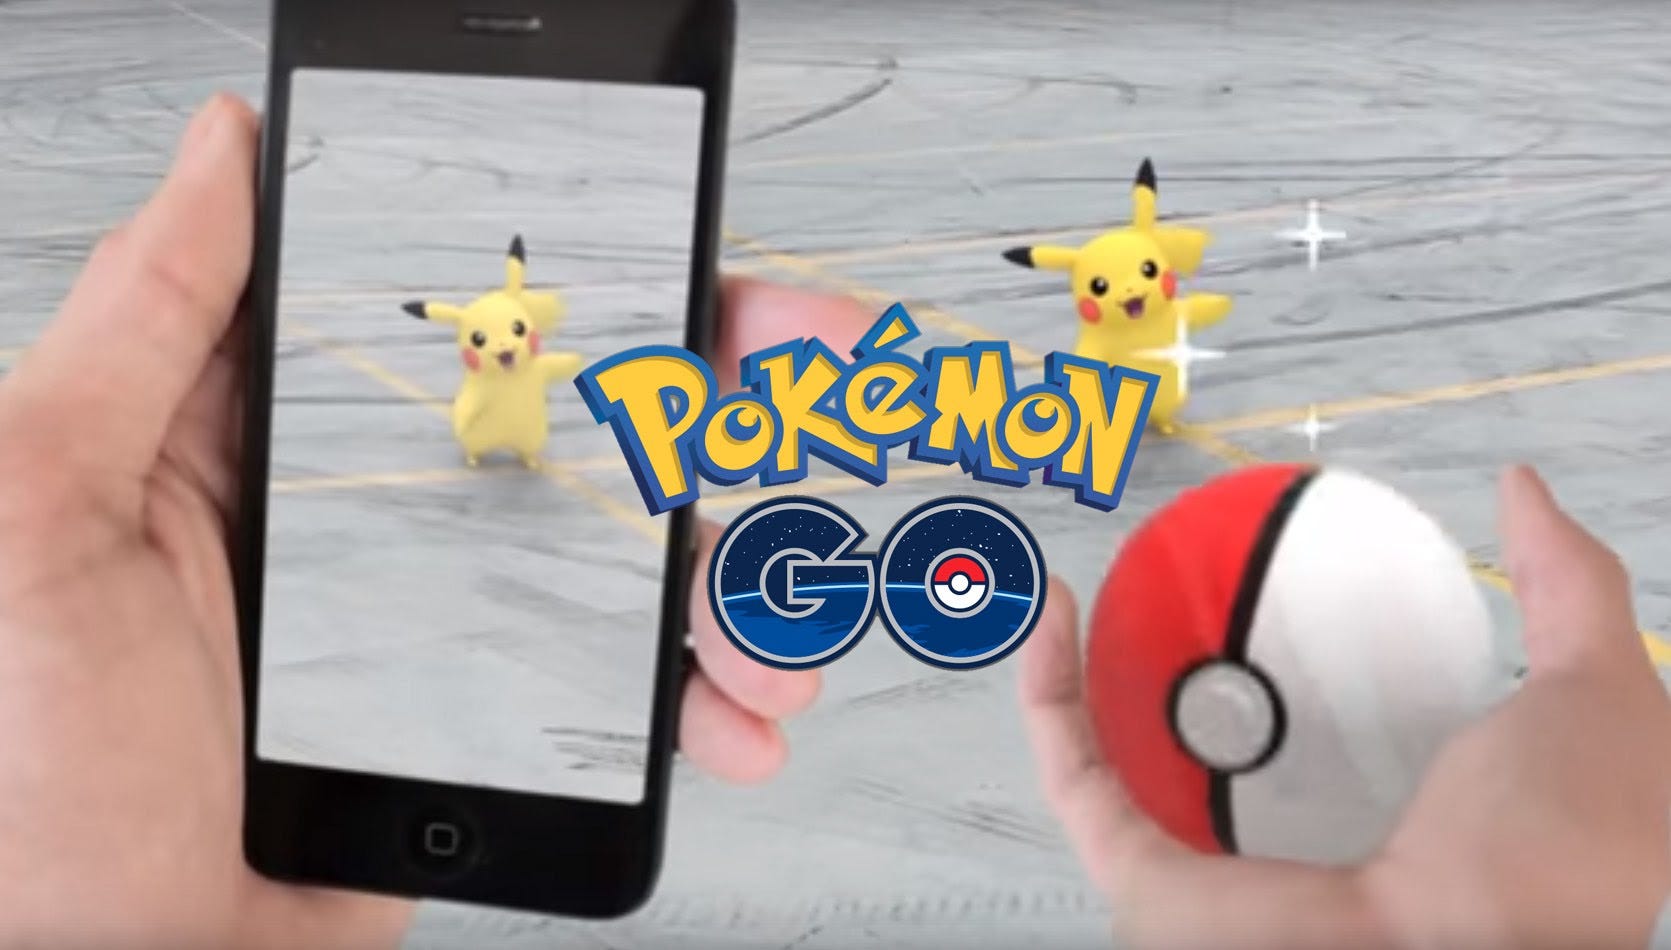 Pokémon Go maps: Pokévision and Pokéradar maps and apps